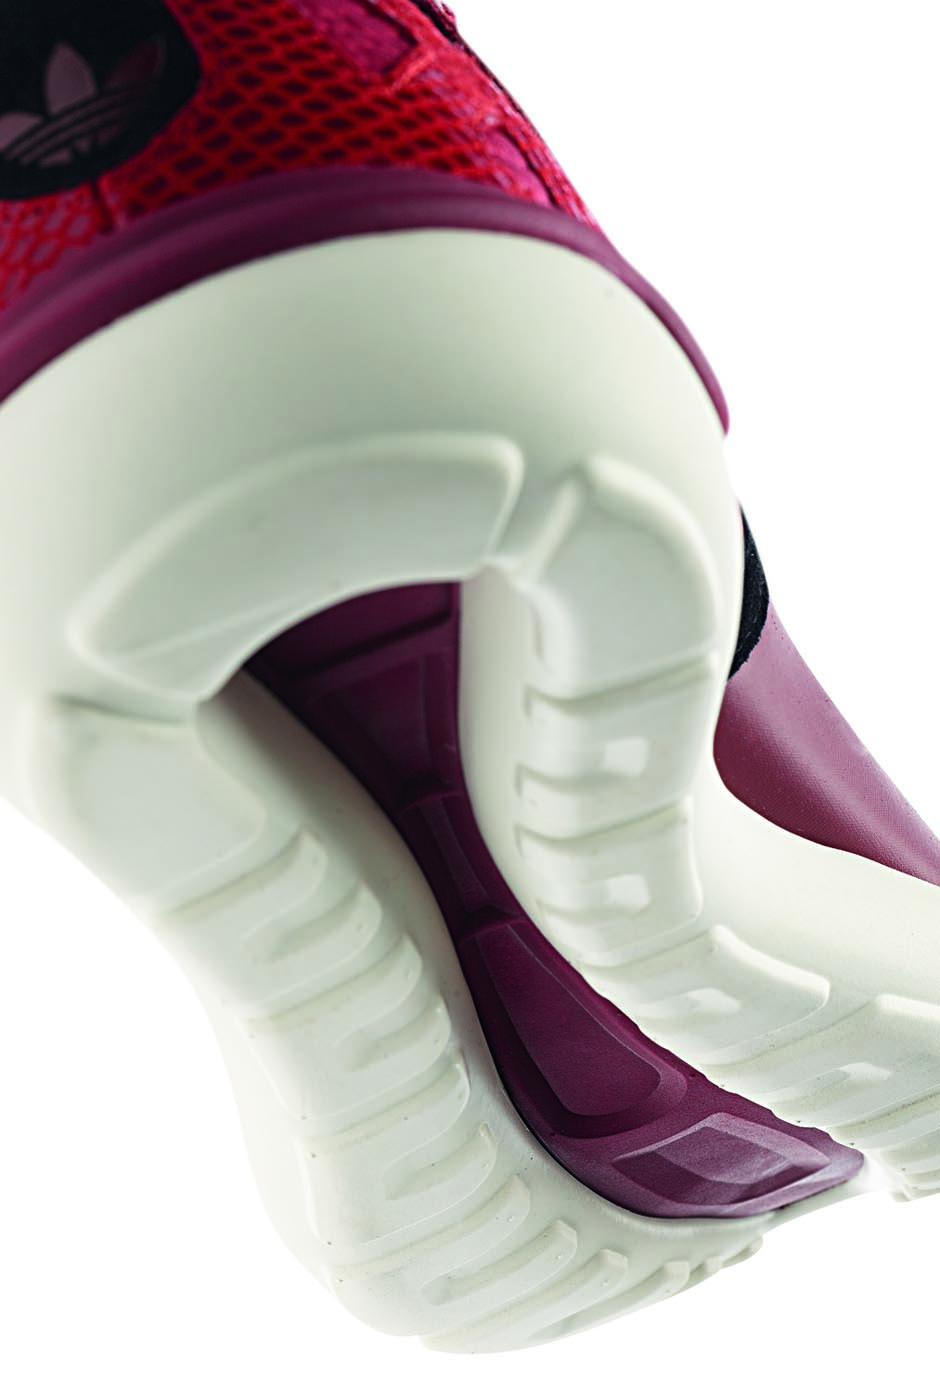 Adidas Originals Dresses Tubular In Snakeskin 12